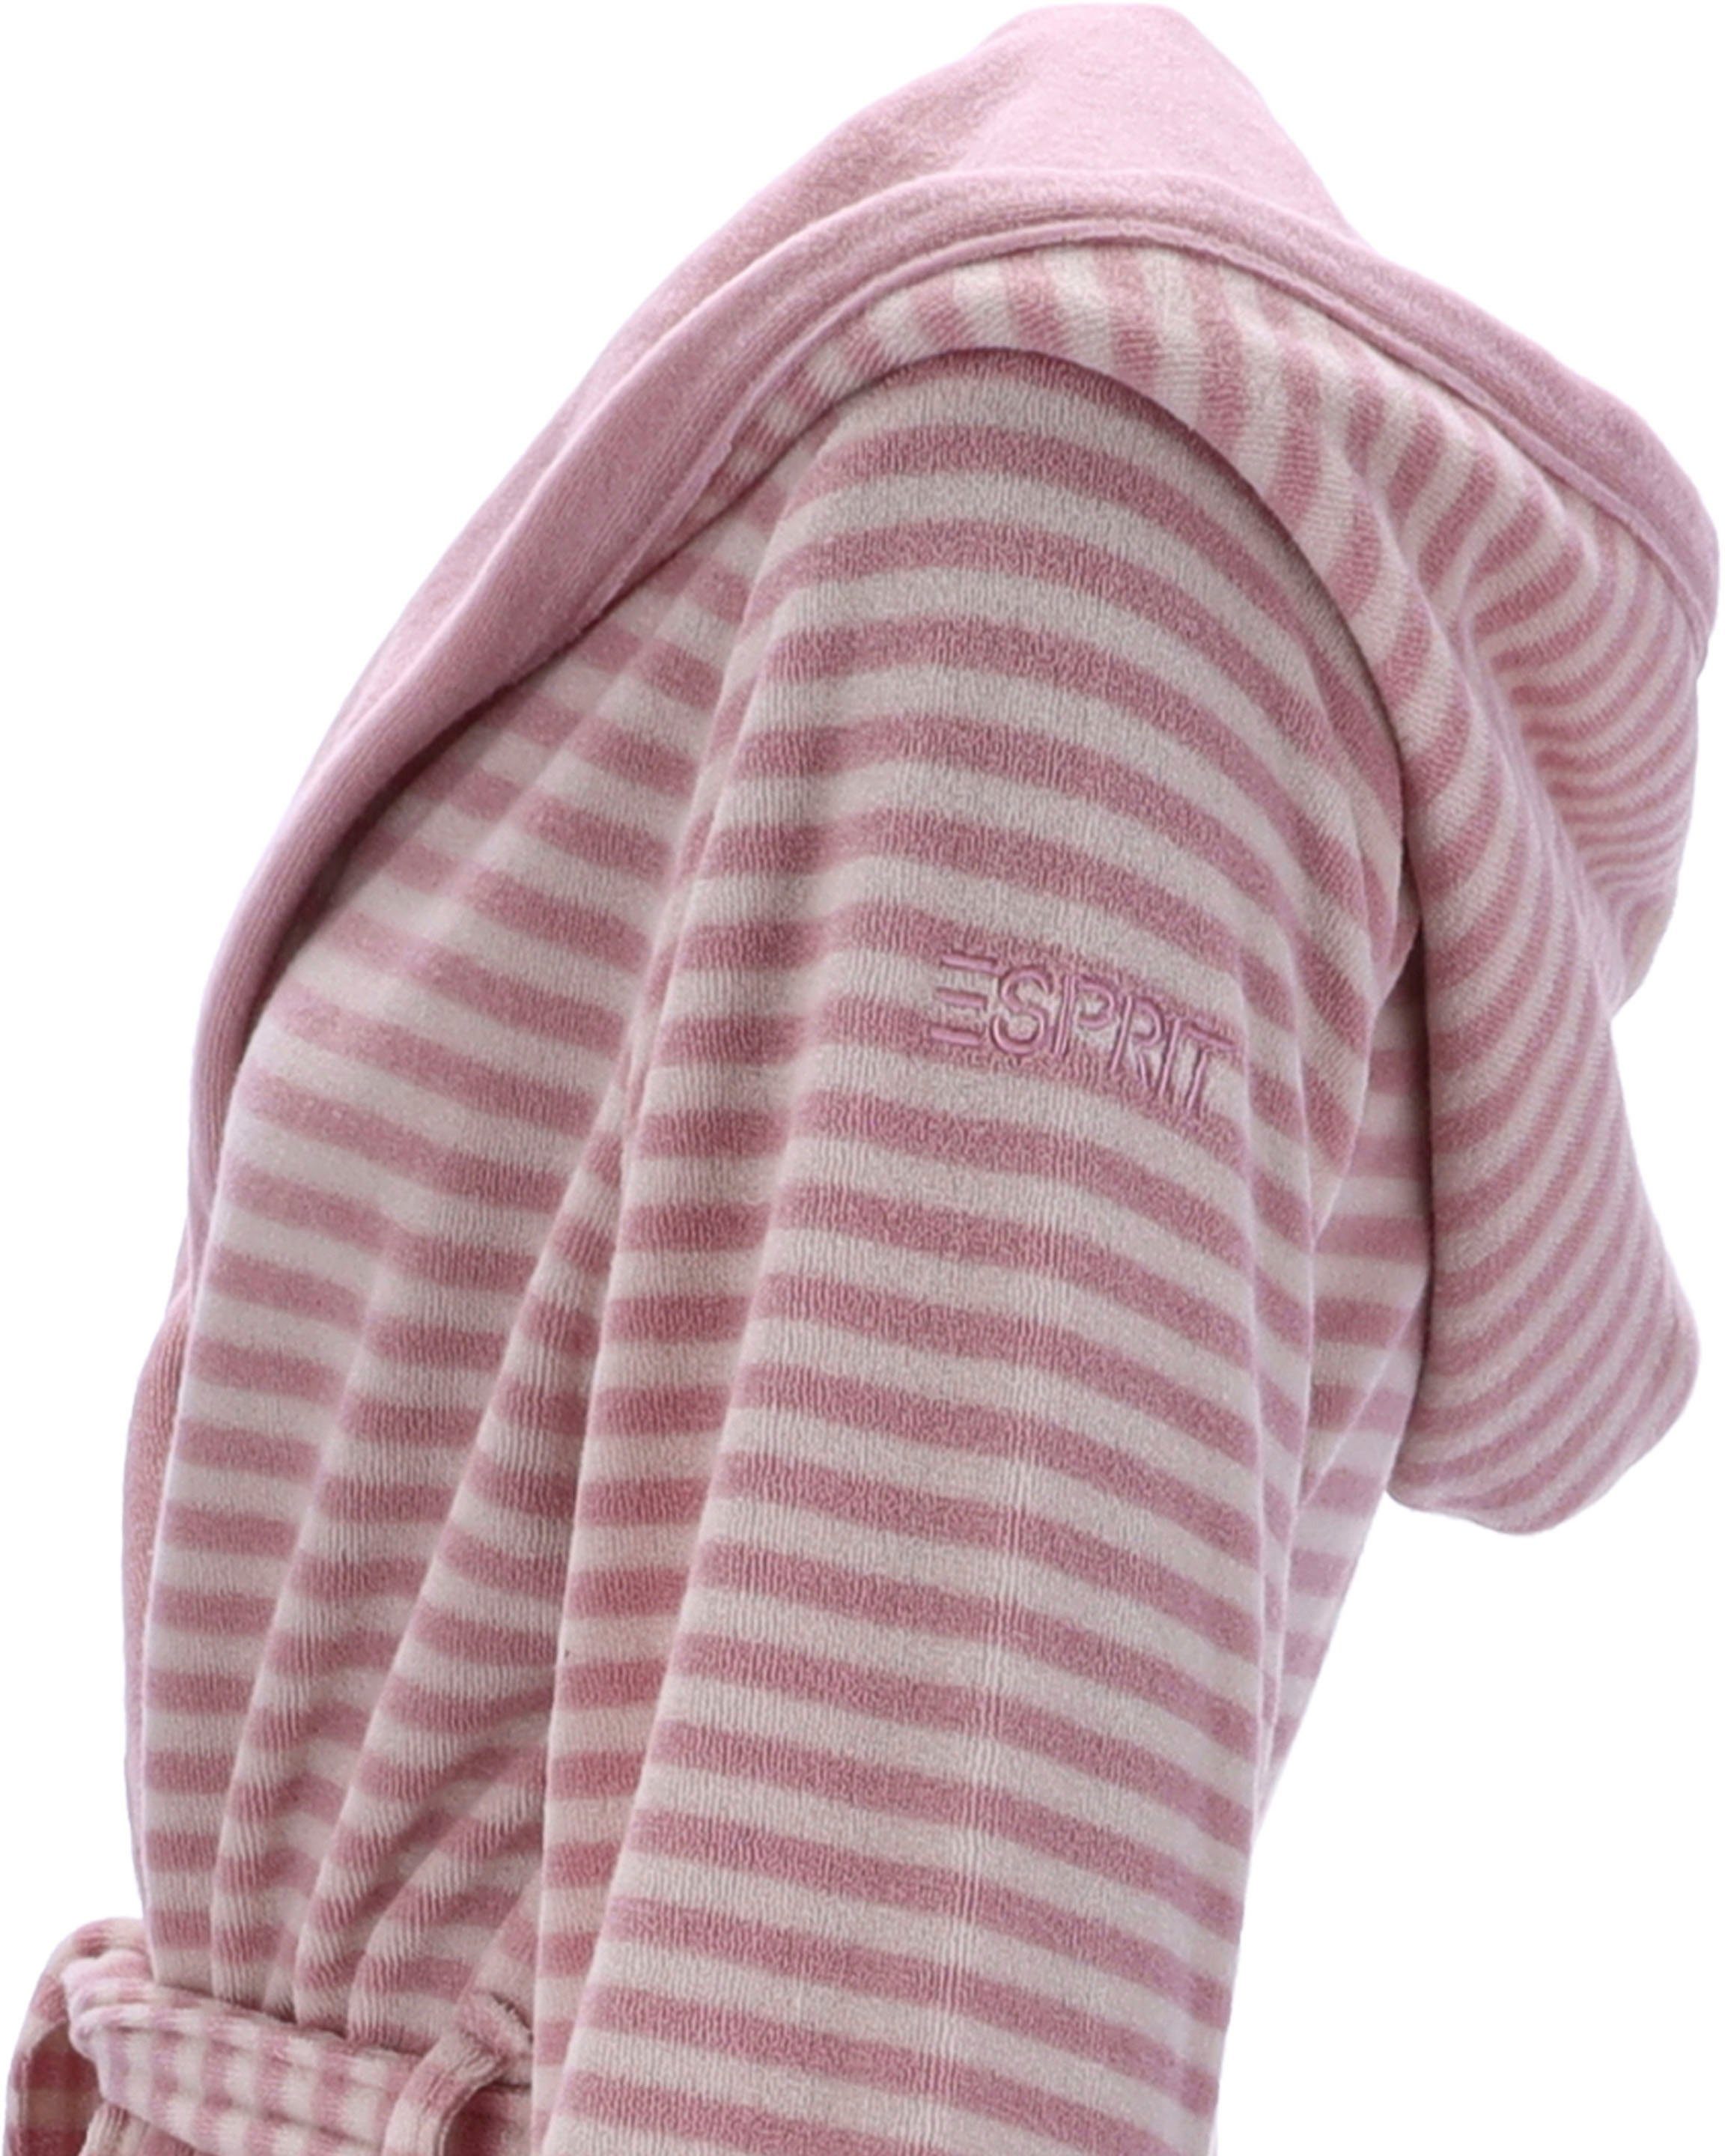 Esprit Damenbademantel rose Kapuze, Hoody, mit Striped Jersey, kurz gestreift, & Logostickerei, Kaputze Kurzform, Gürtel